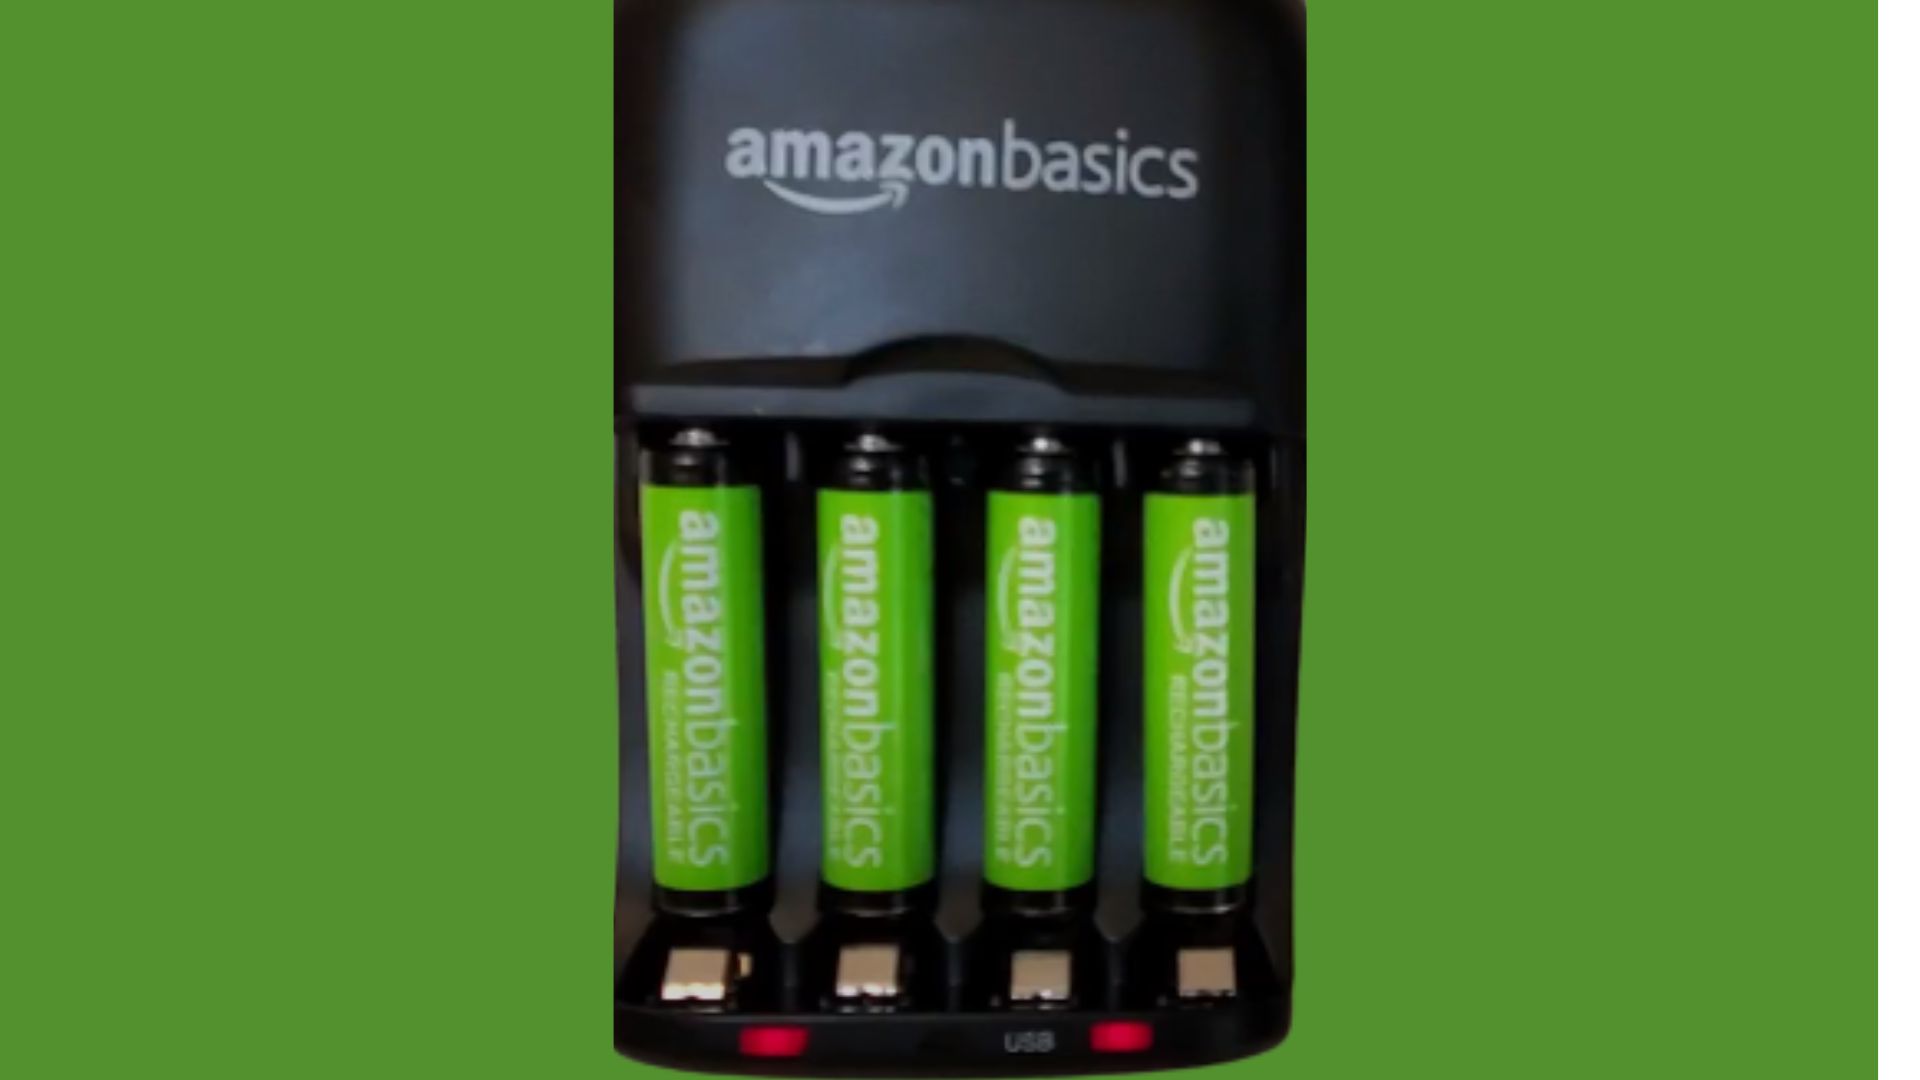 amazon basics battery charger flashing red, green light